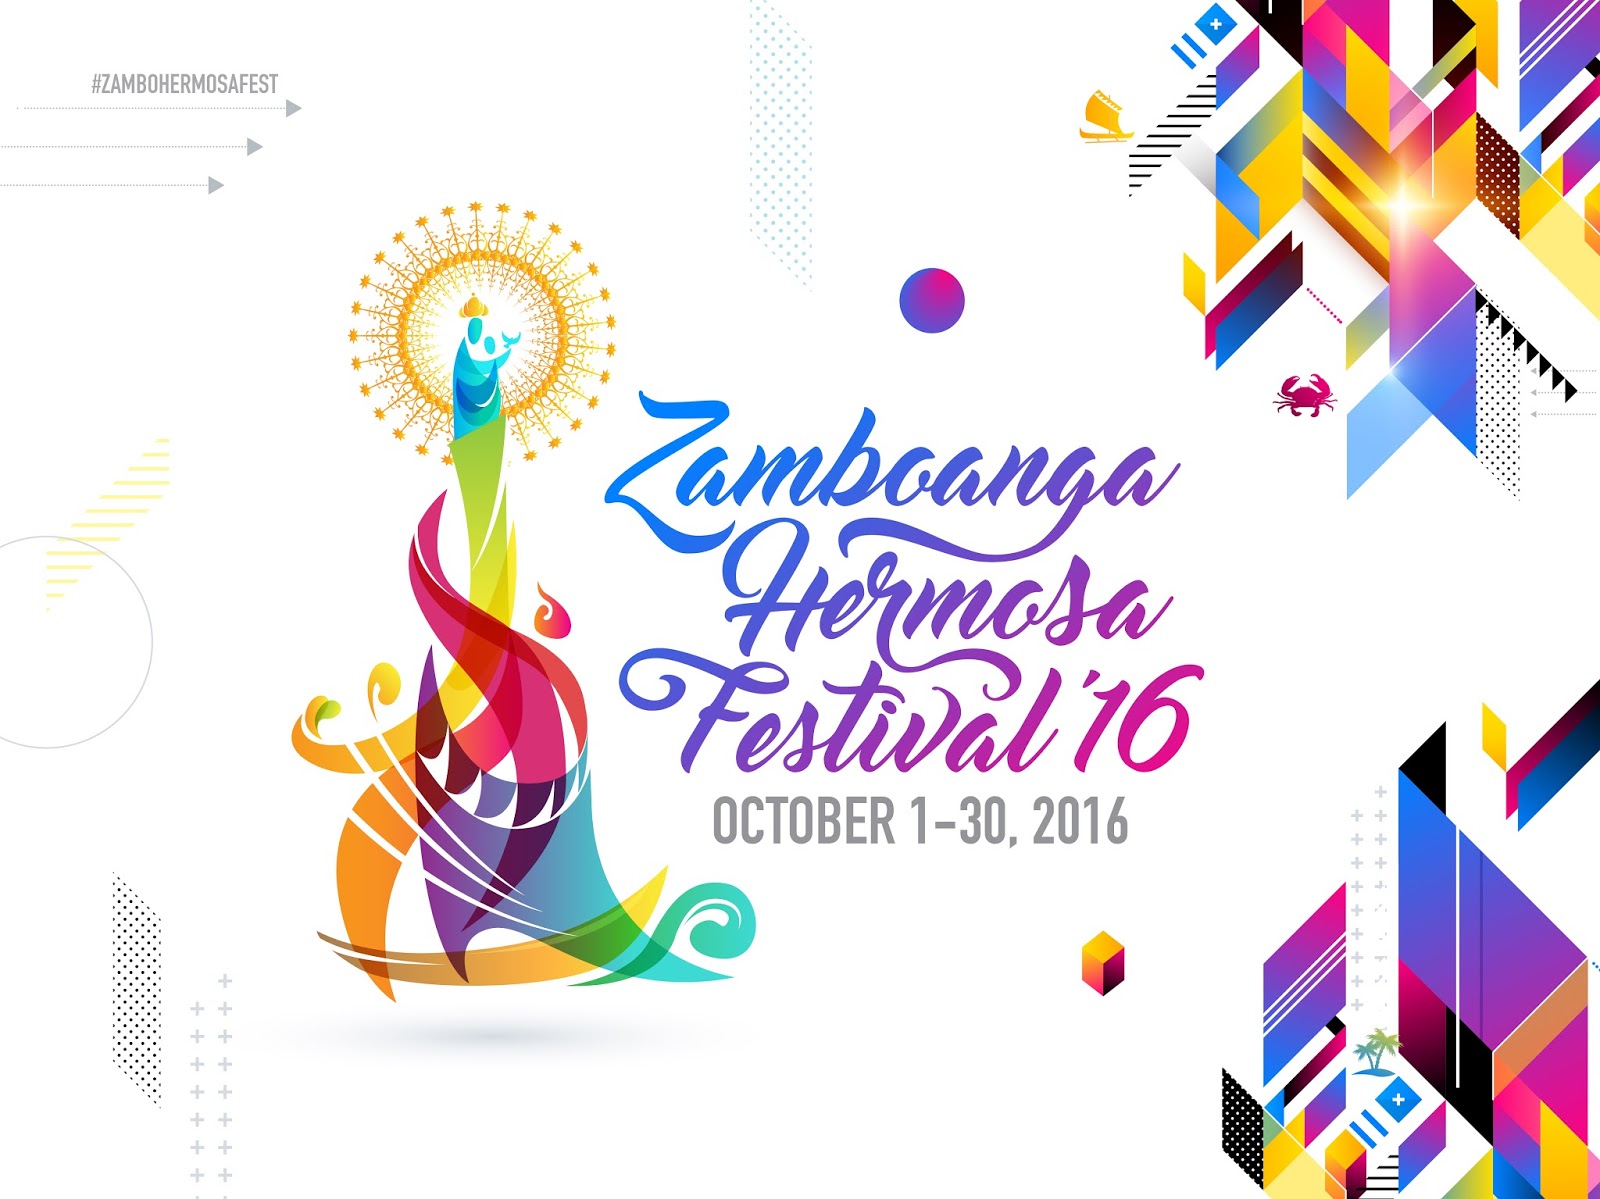 Zamboanga Hermosa Festival Logo - csz97 Blog Folio